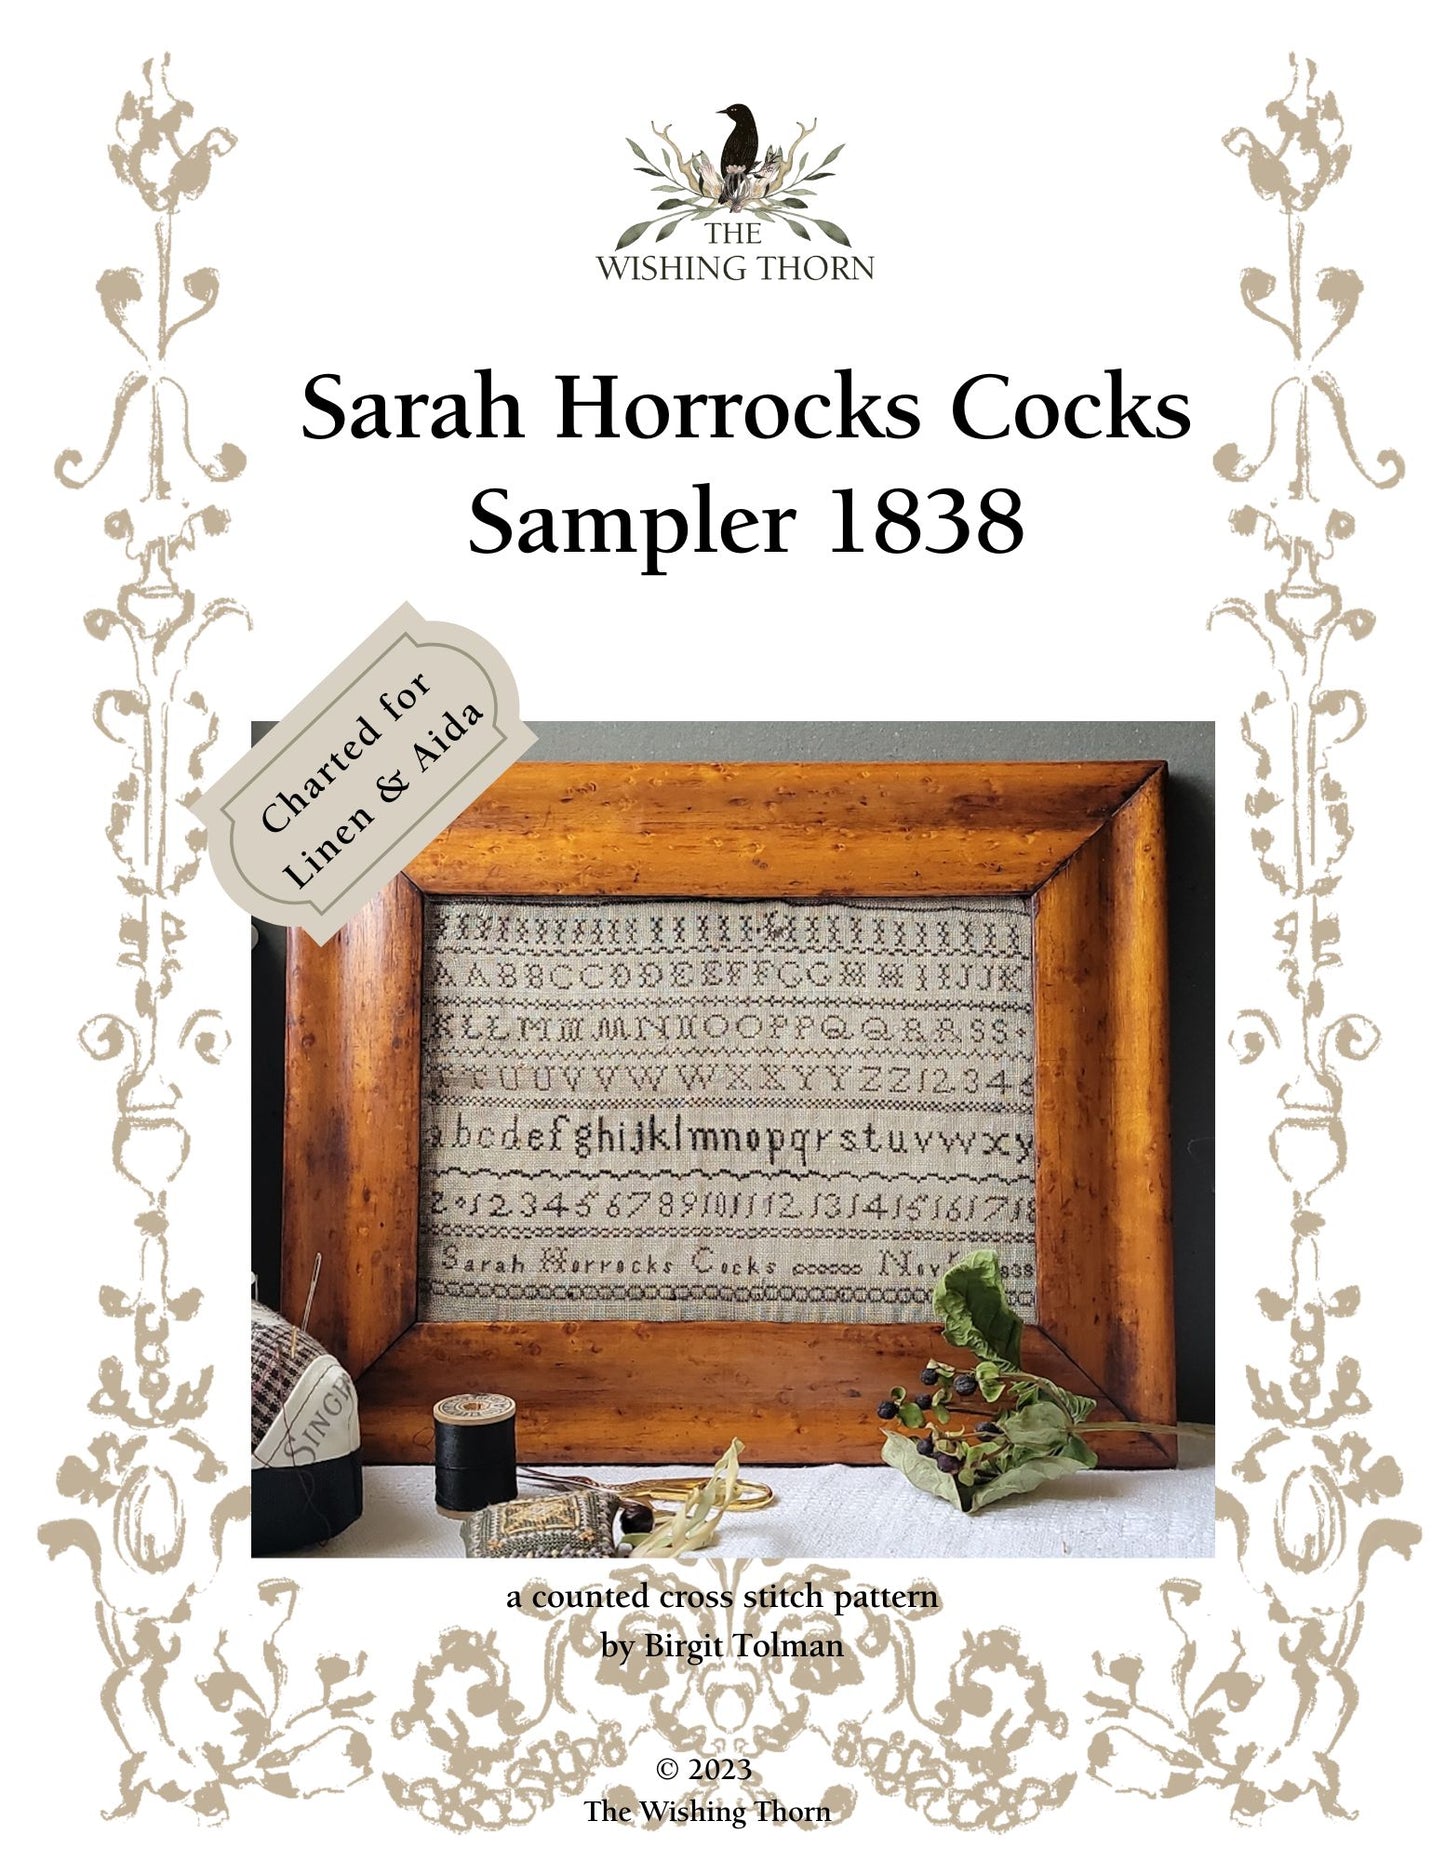 Sarah Horrocks Cocks 1838 Sampler Pattern